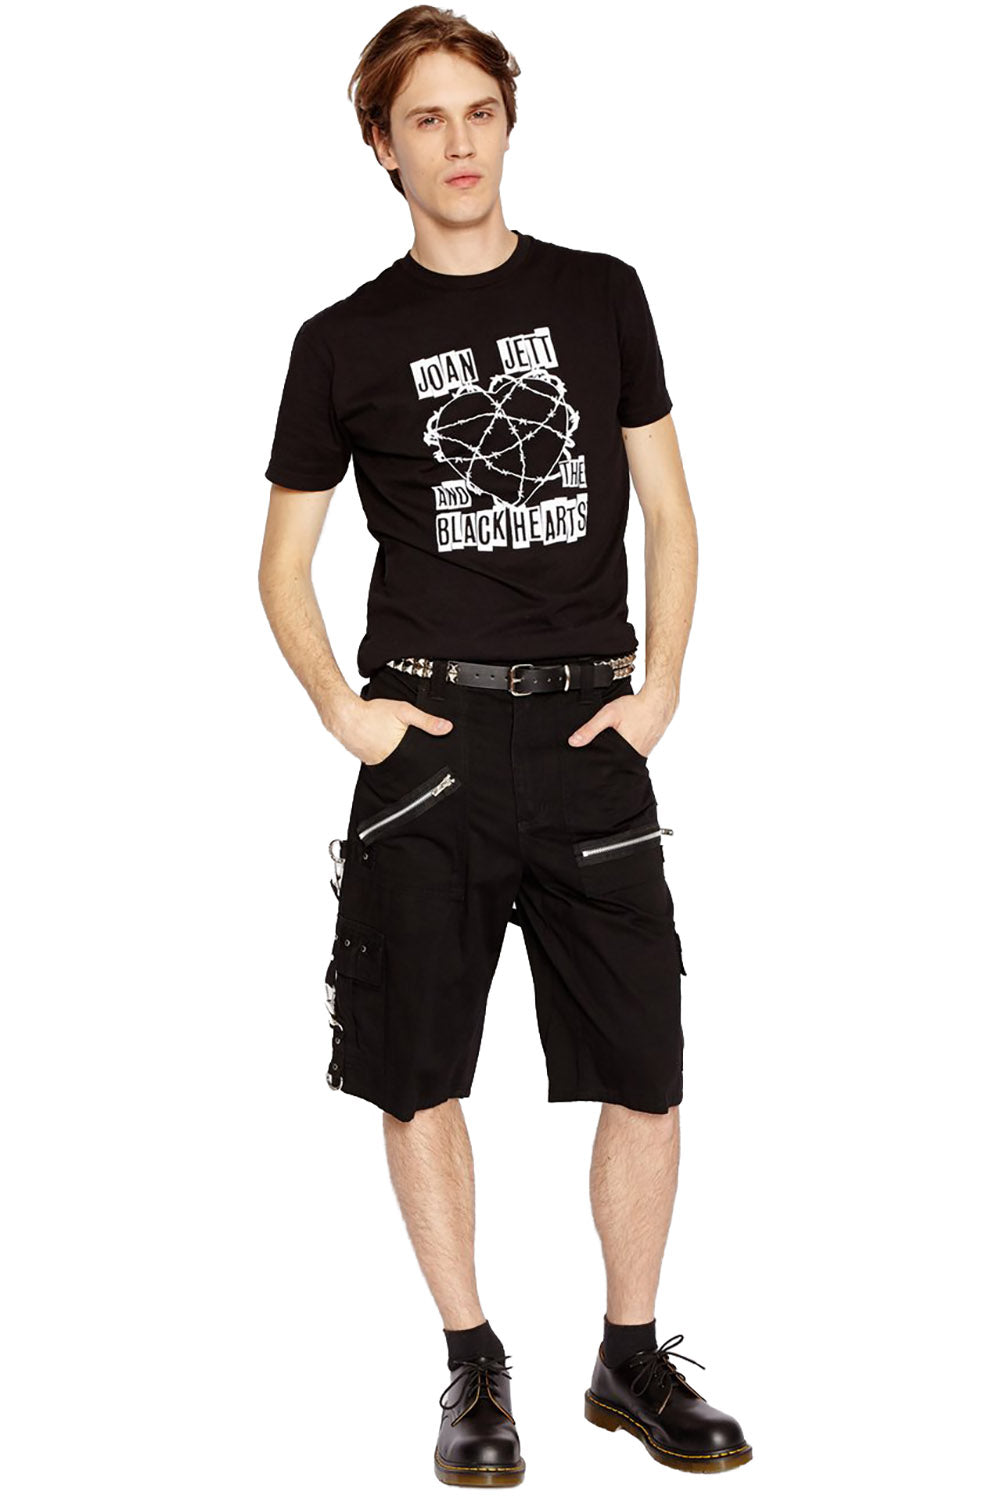 Tripp Punk Shorts [Black]